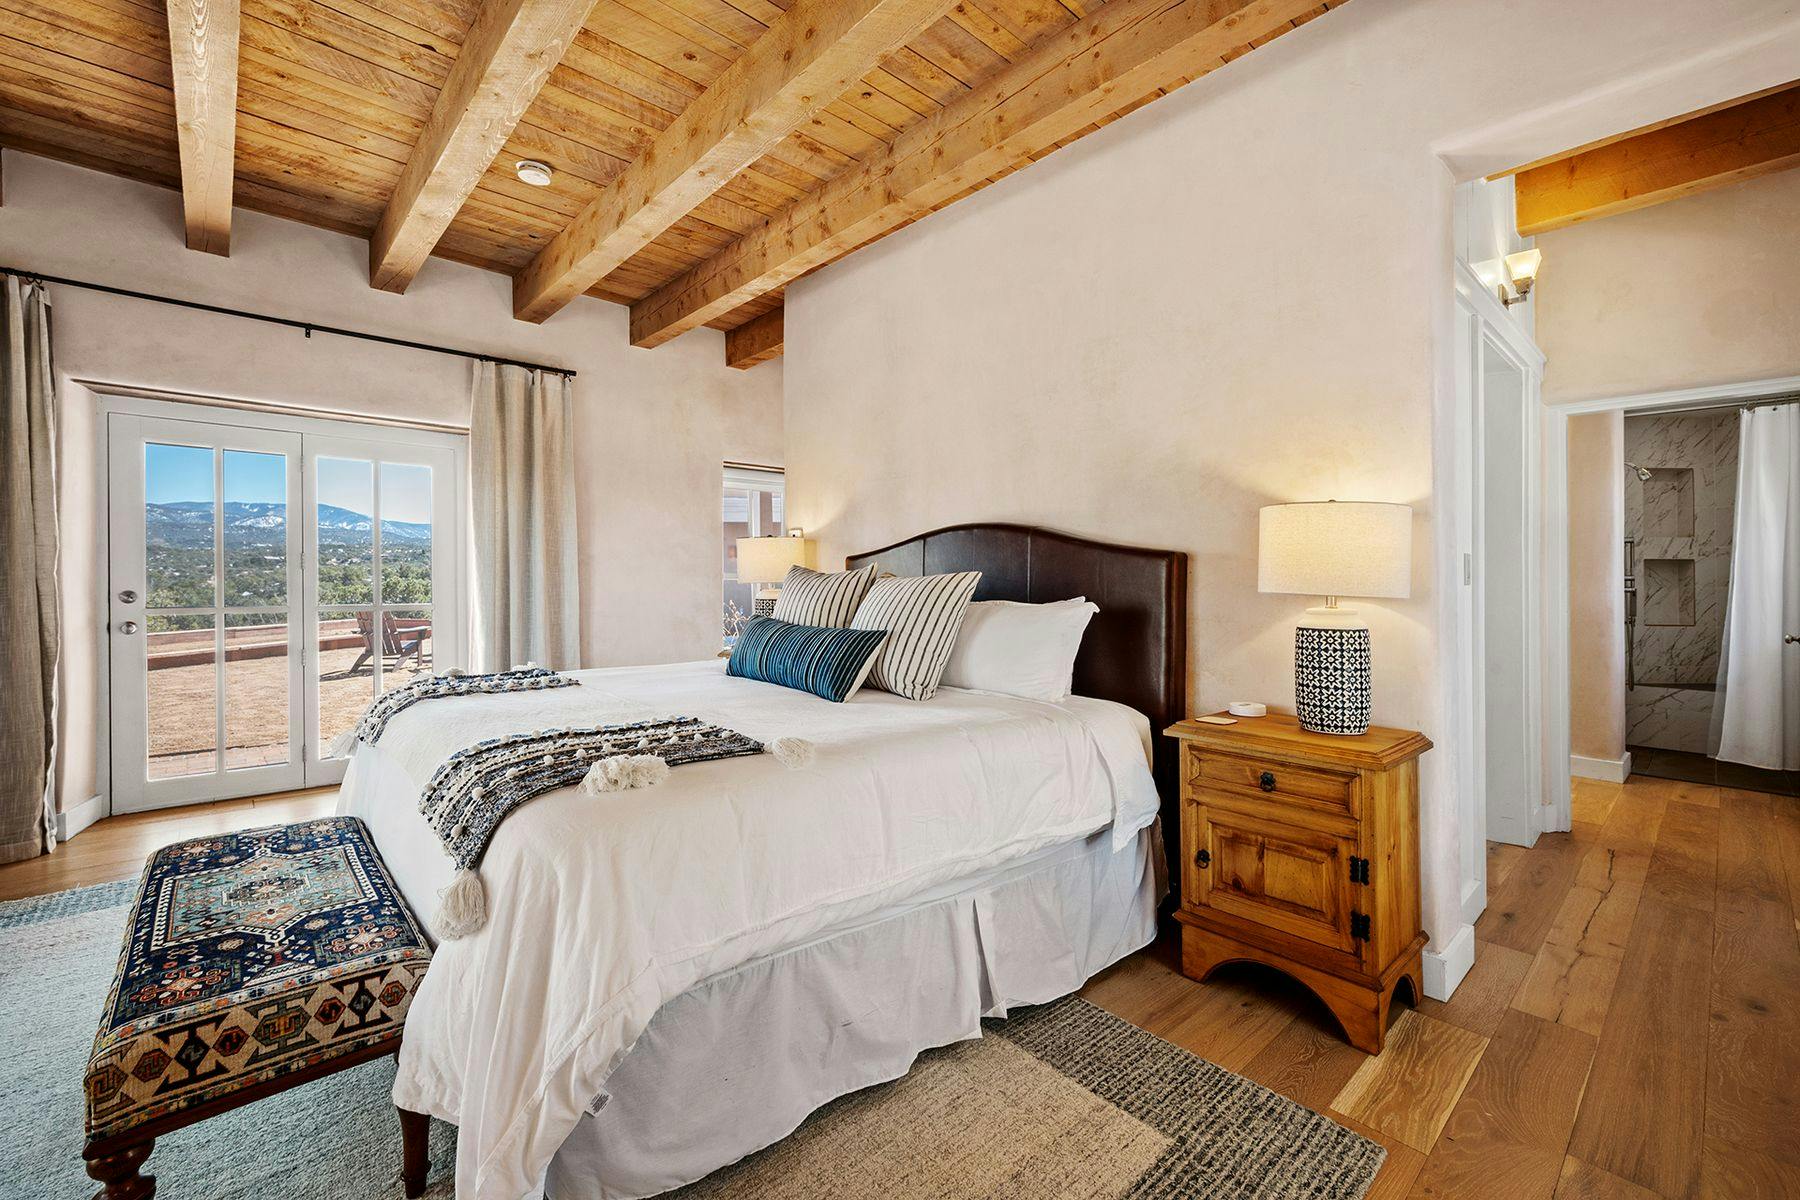 Beautiful bedroom in a Santa Fe vacation rental home